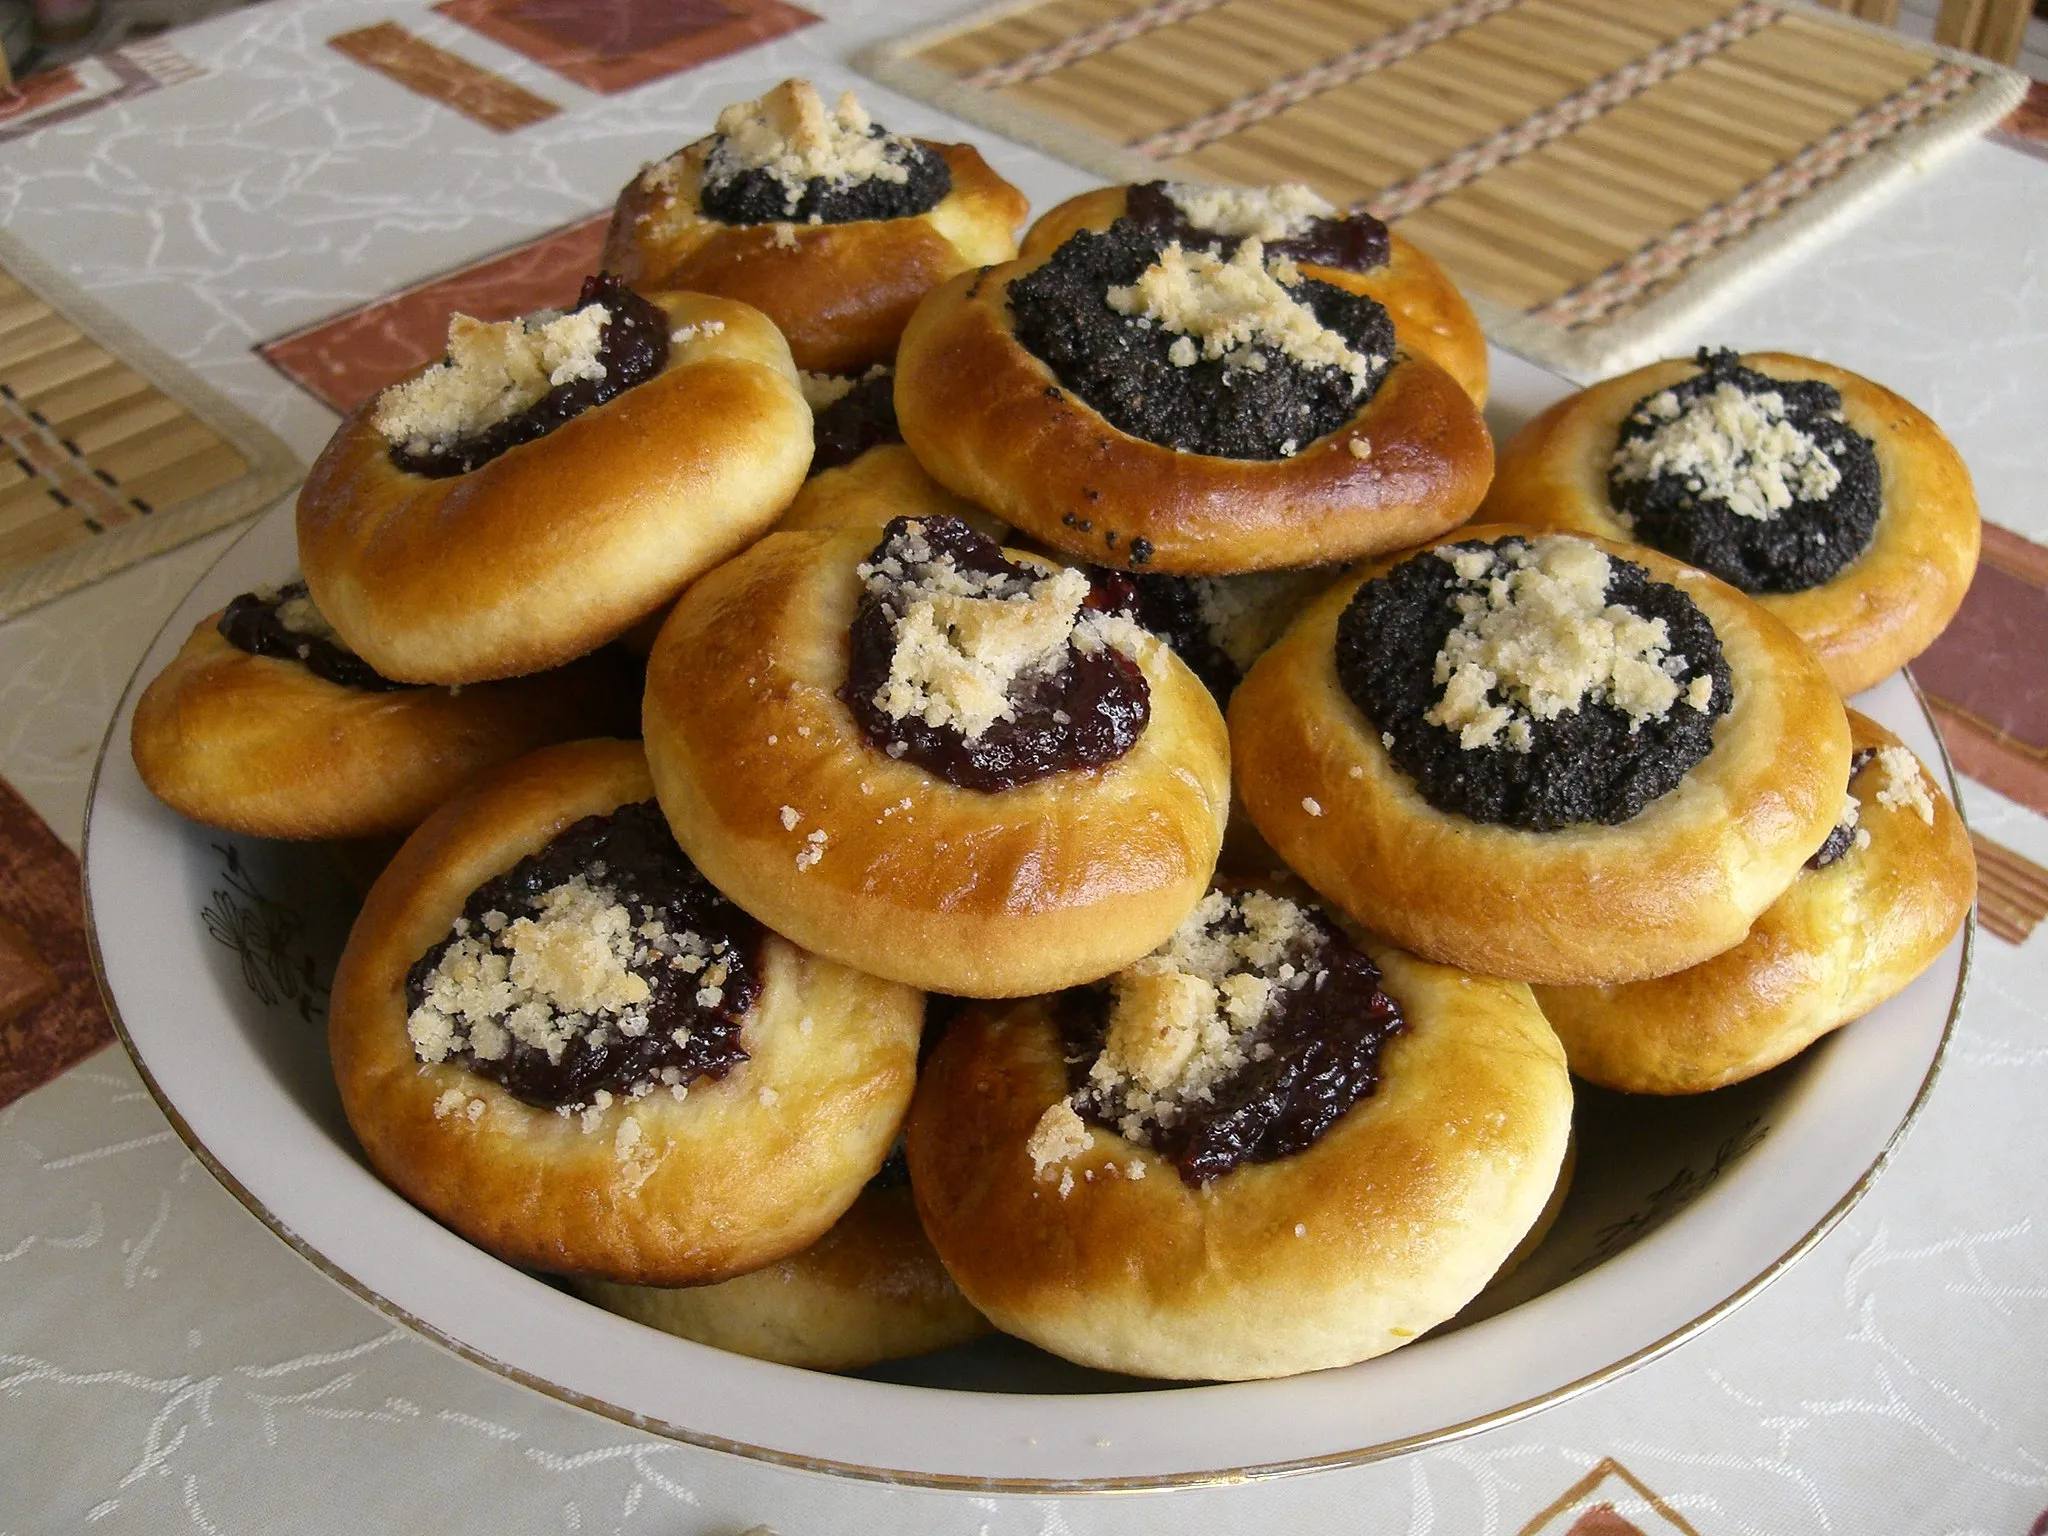 Photo showing: Koláčky - czech sweet bread with plum jam or poppy seeds, Czech Republic.